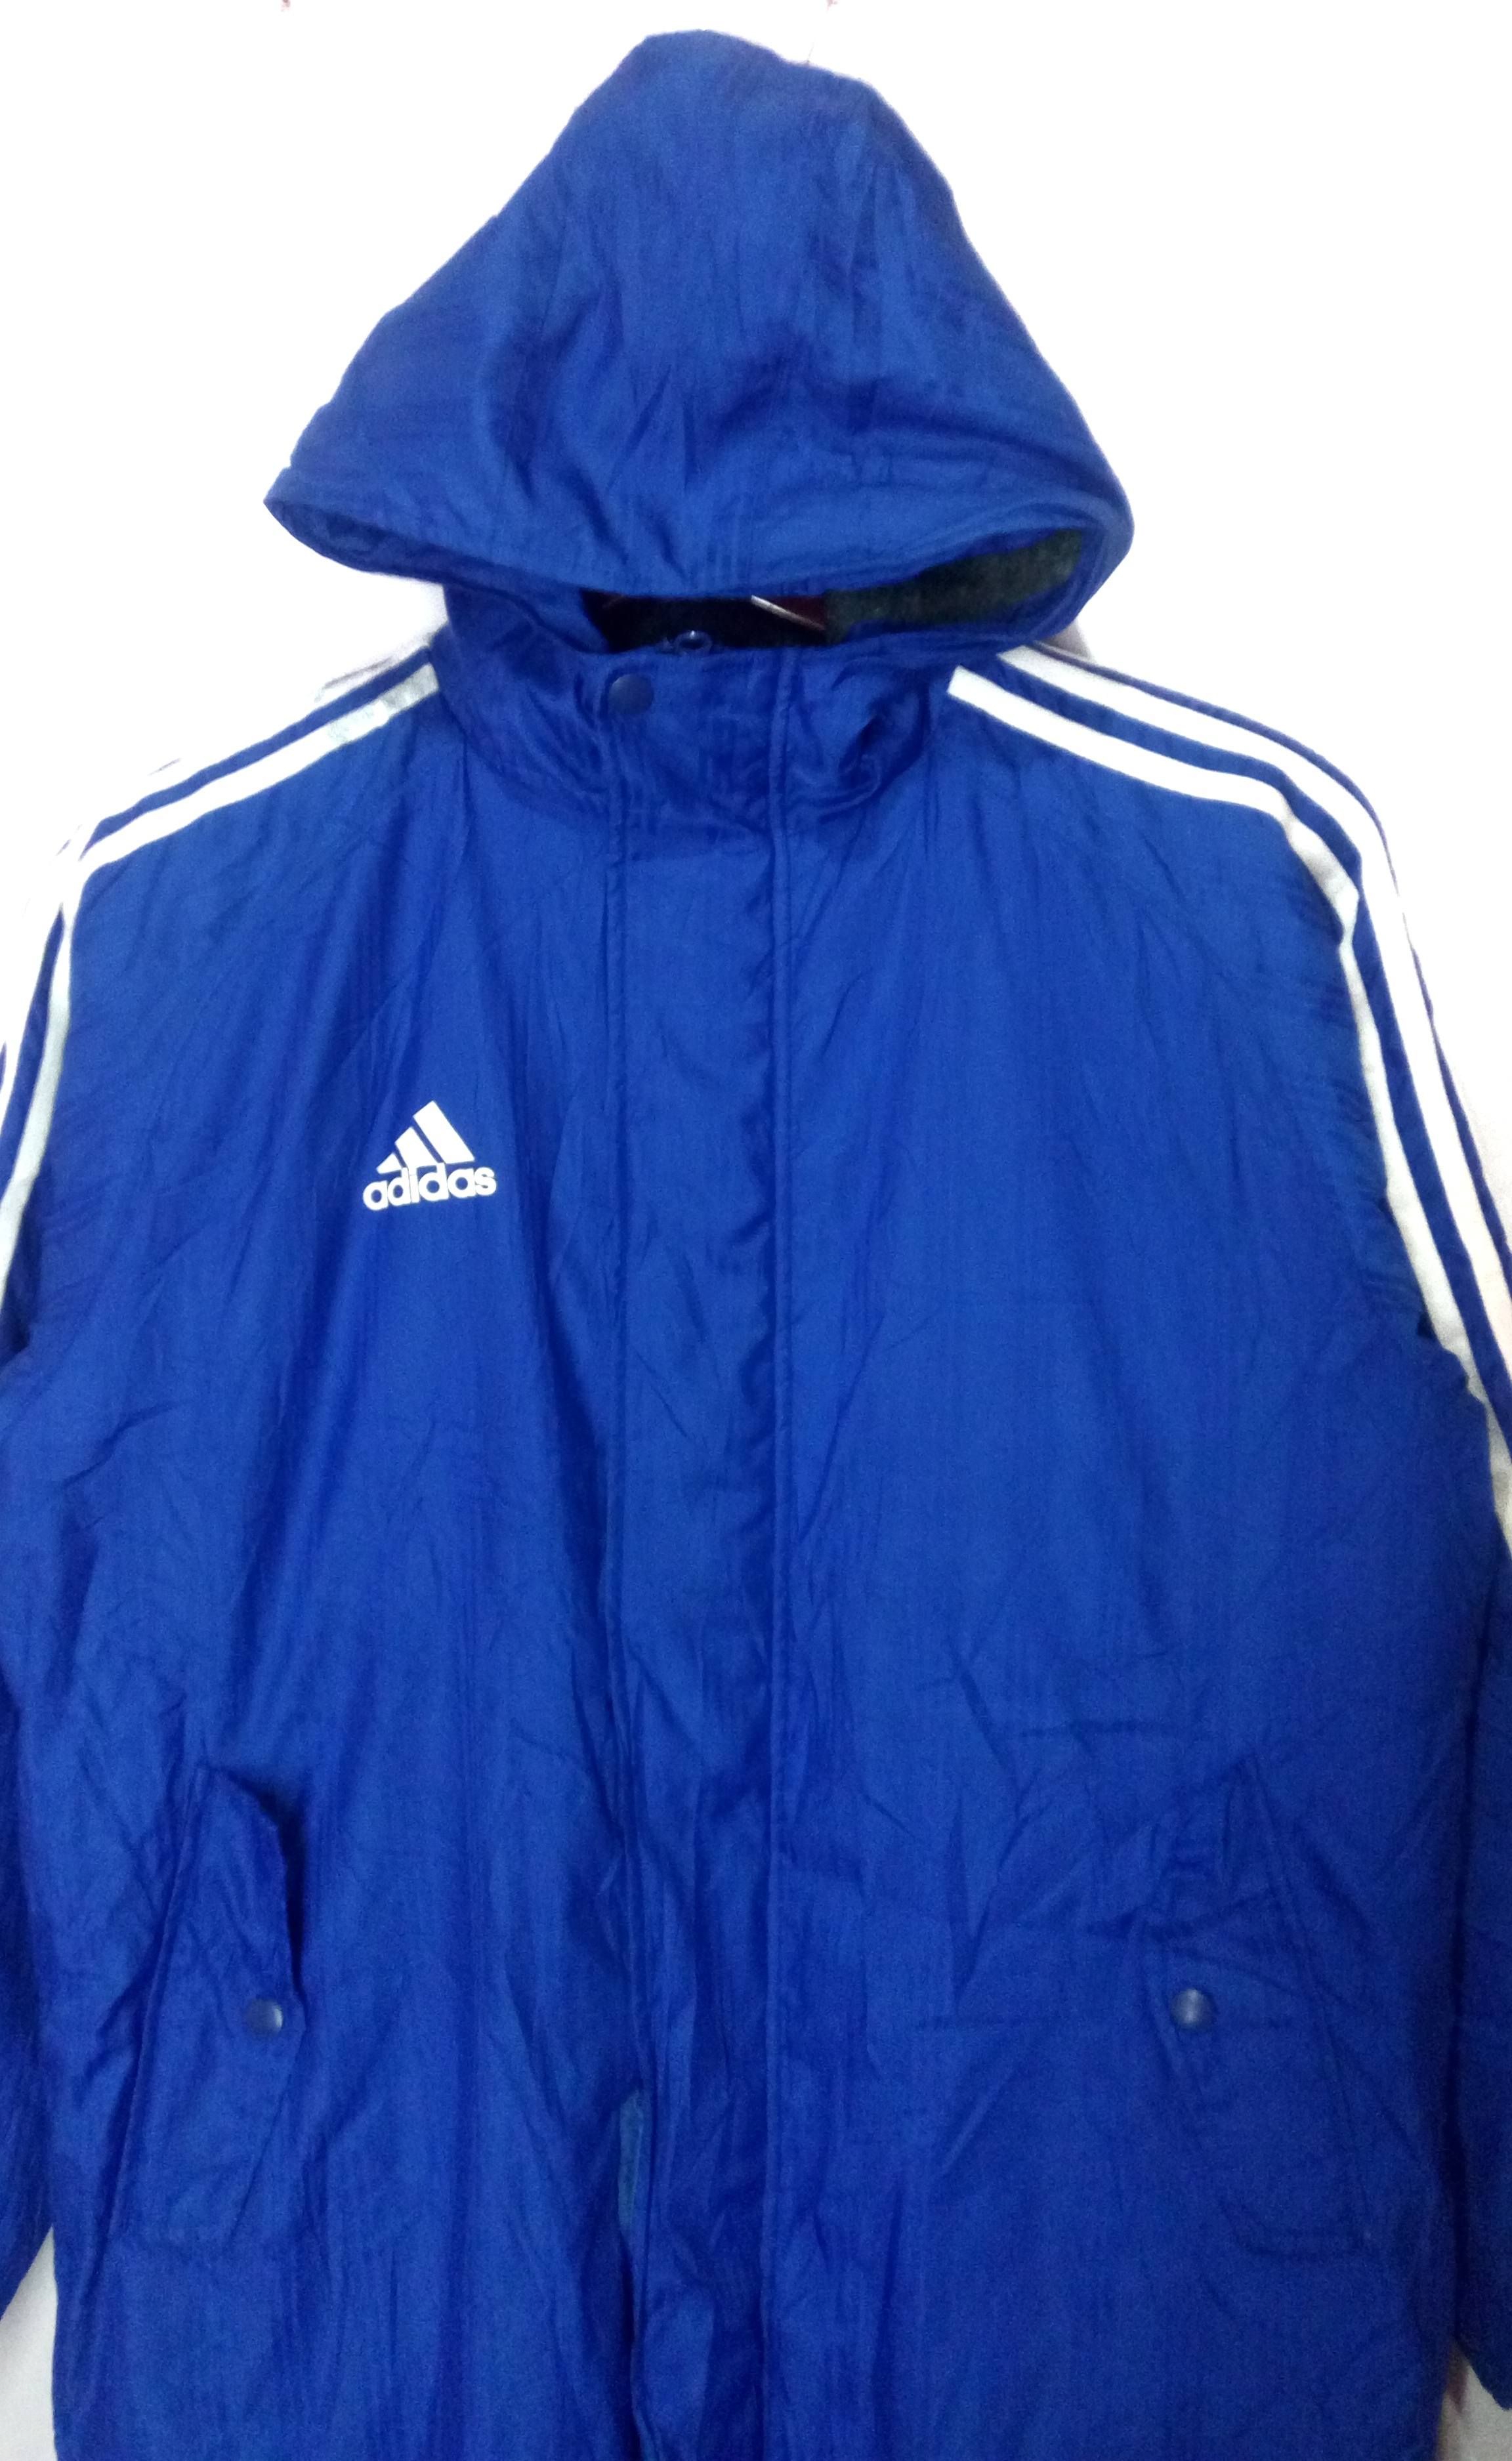 Adidas big logo sherpa inner lining long jacket hoodie parka winter size M/L - 3